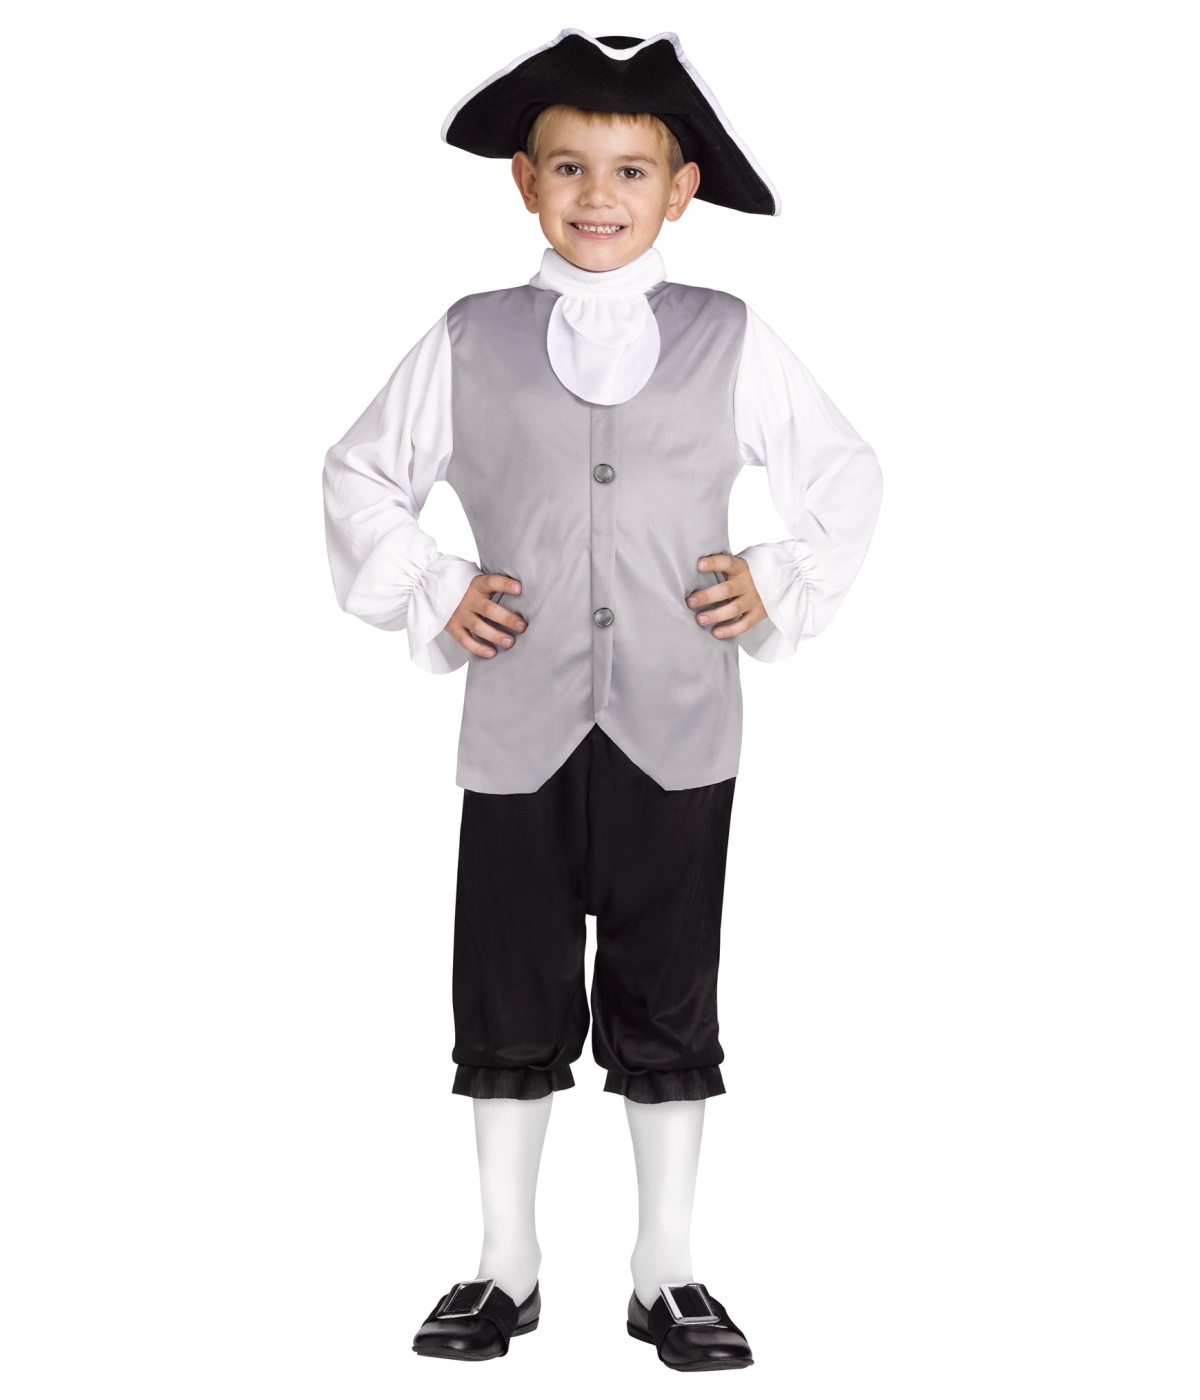  Boys Historic Colonial Costume